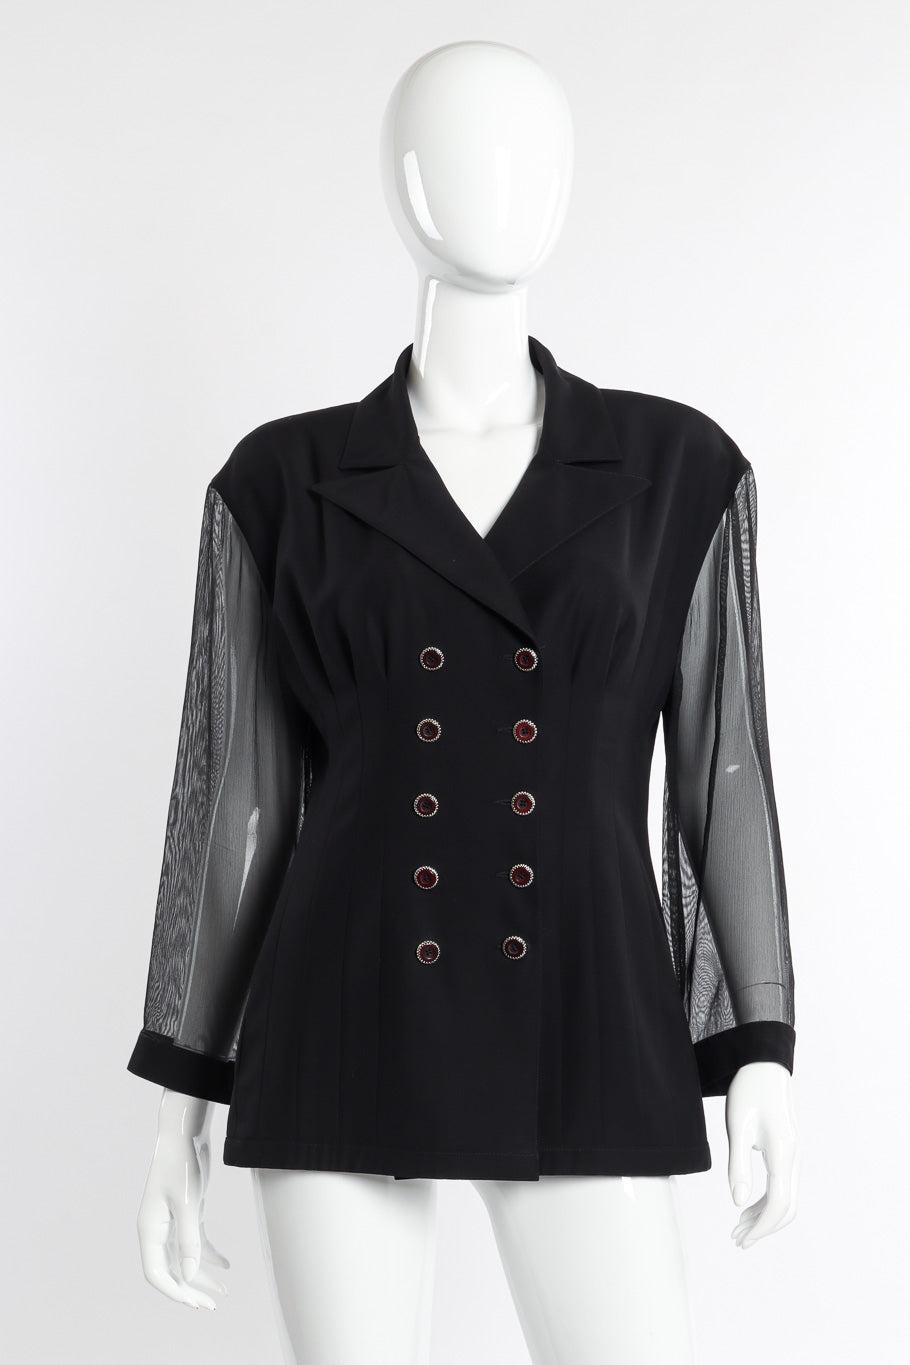 Vintage Karl Lagerfeld Double Breasted Sheer Jacket front on mannequin @recessla